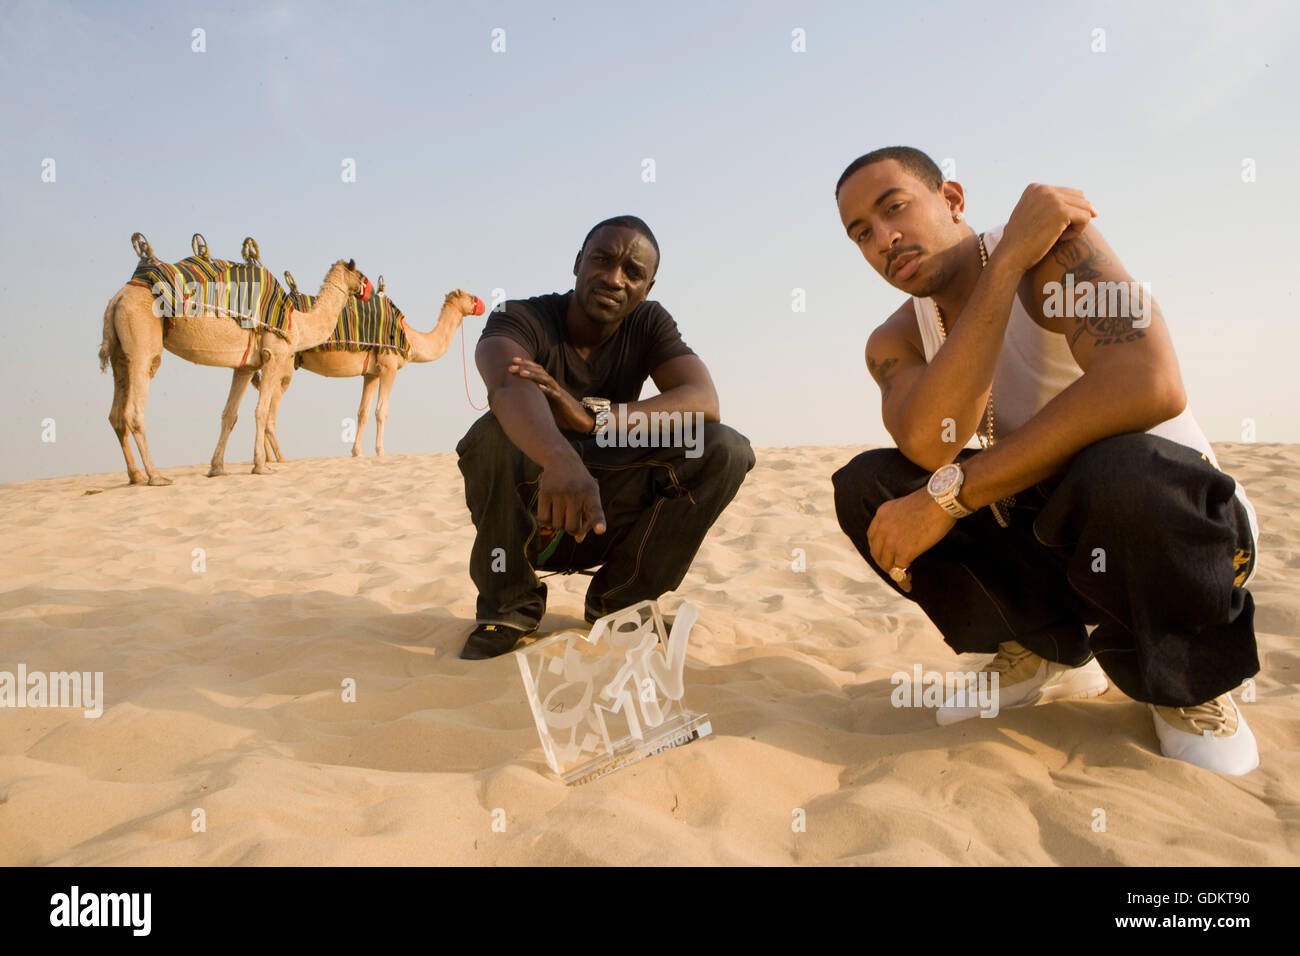 Ludacris and Akon strike a pose in the desert, November 2007, Dubai, UAE. Stock Photo